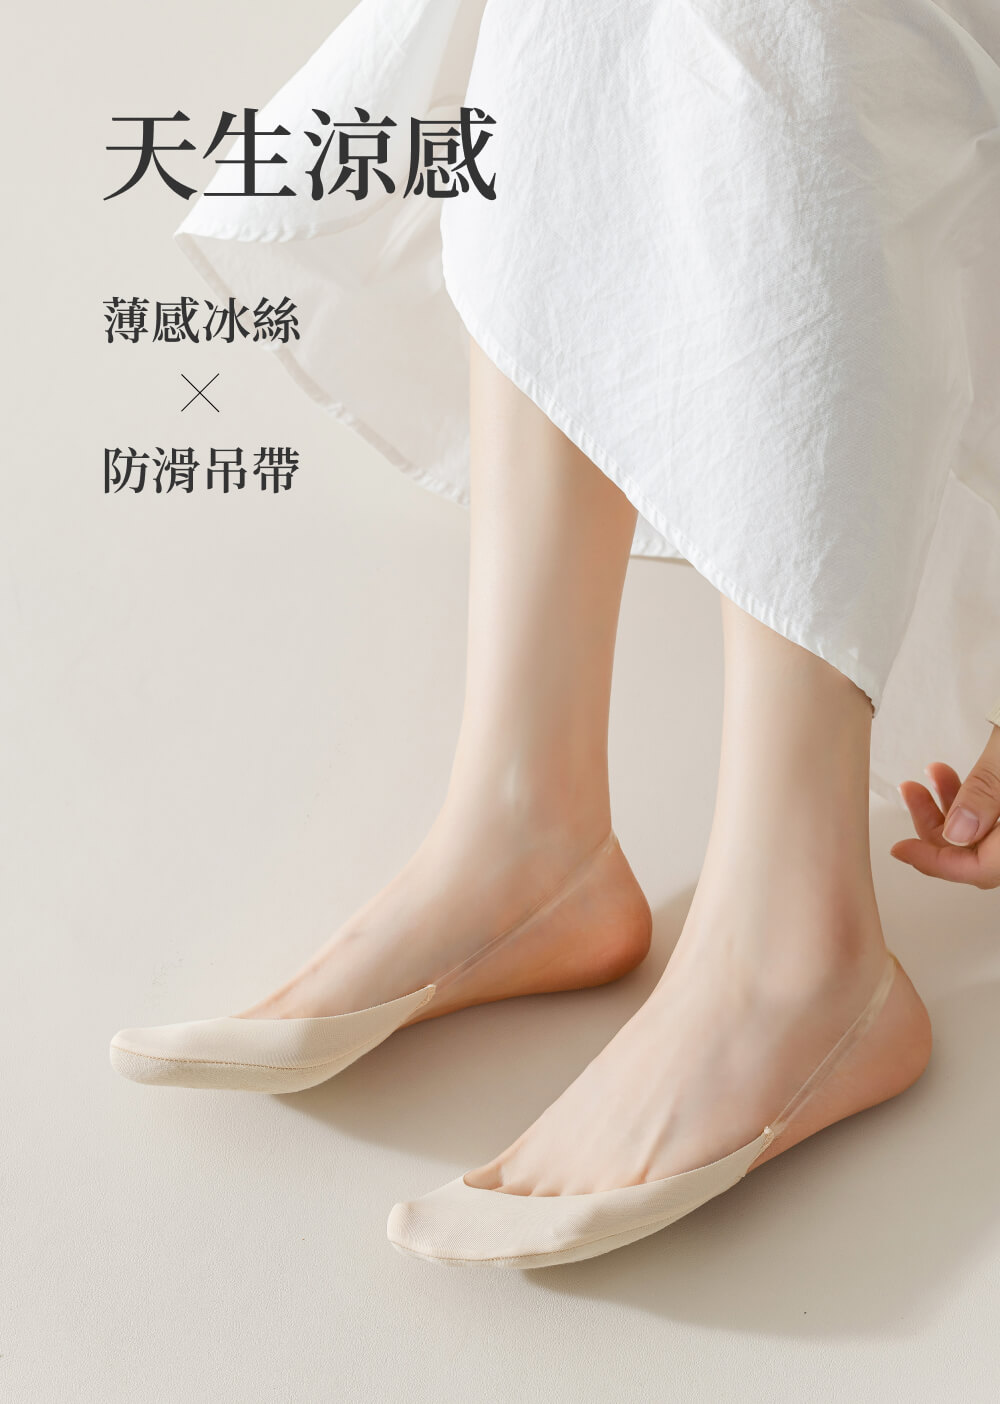 NicoFun 愛定做 3雙 高跟鞋 淺口隱形襪 純棉 船型